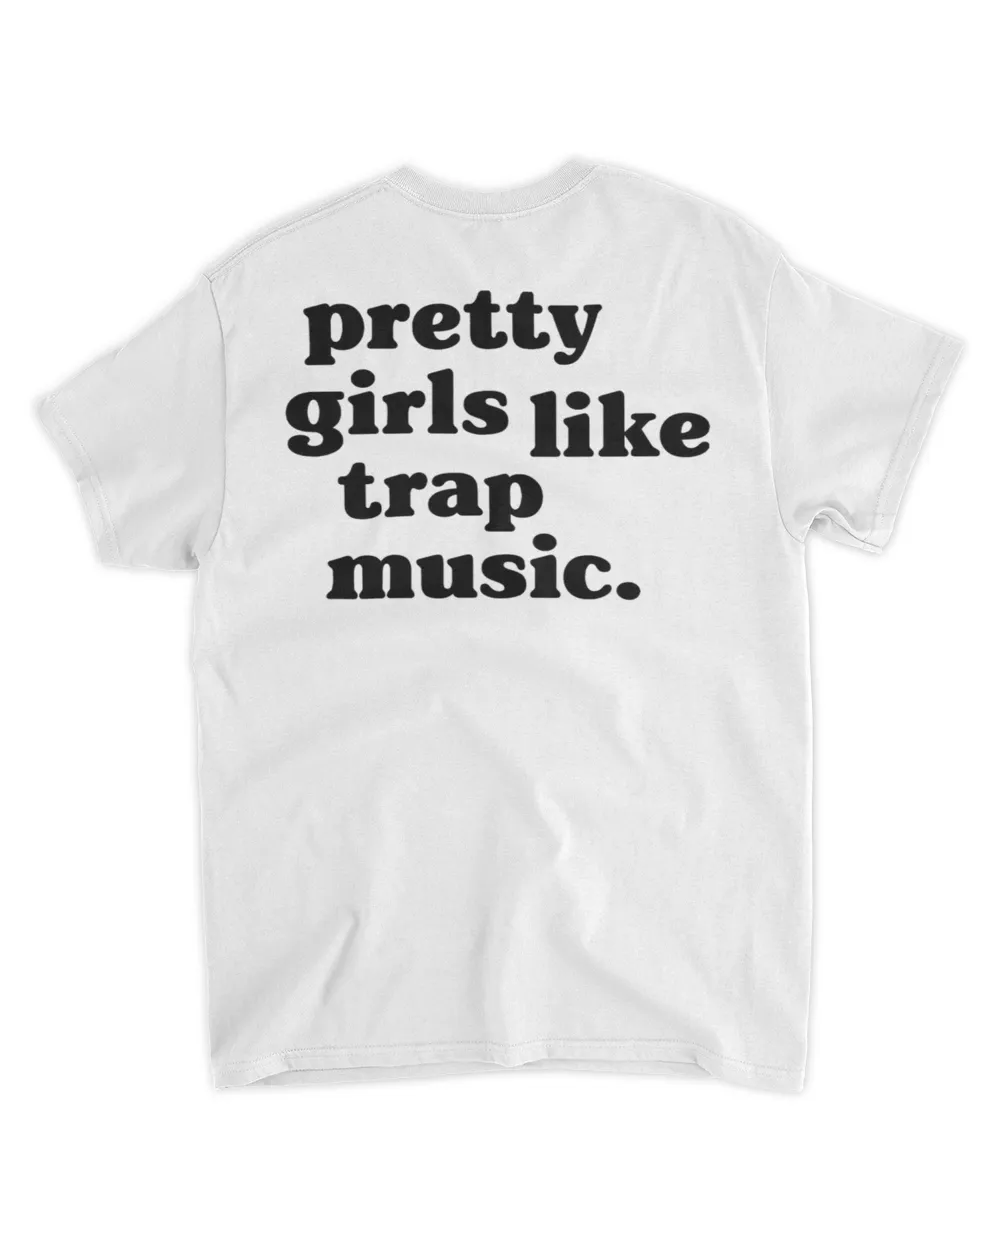  Pretty girls like trap music shirt